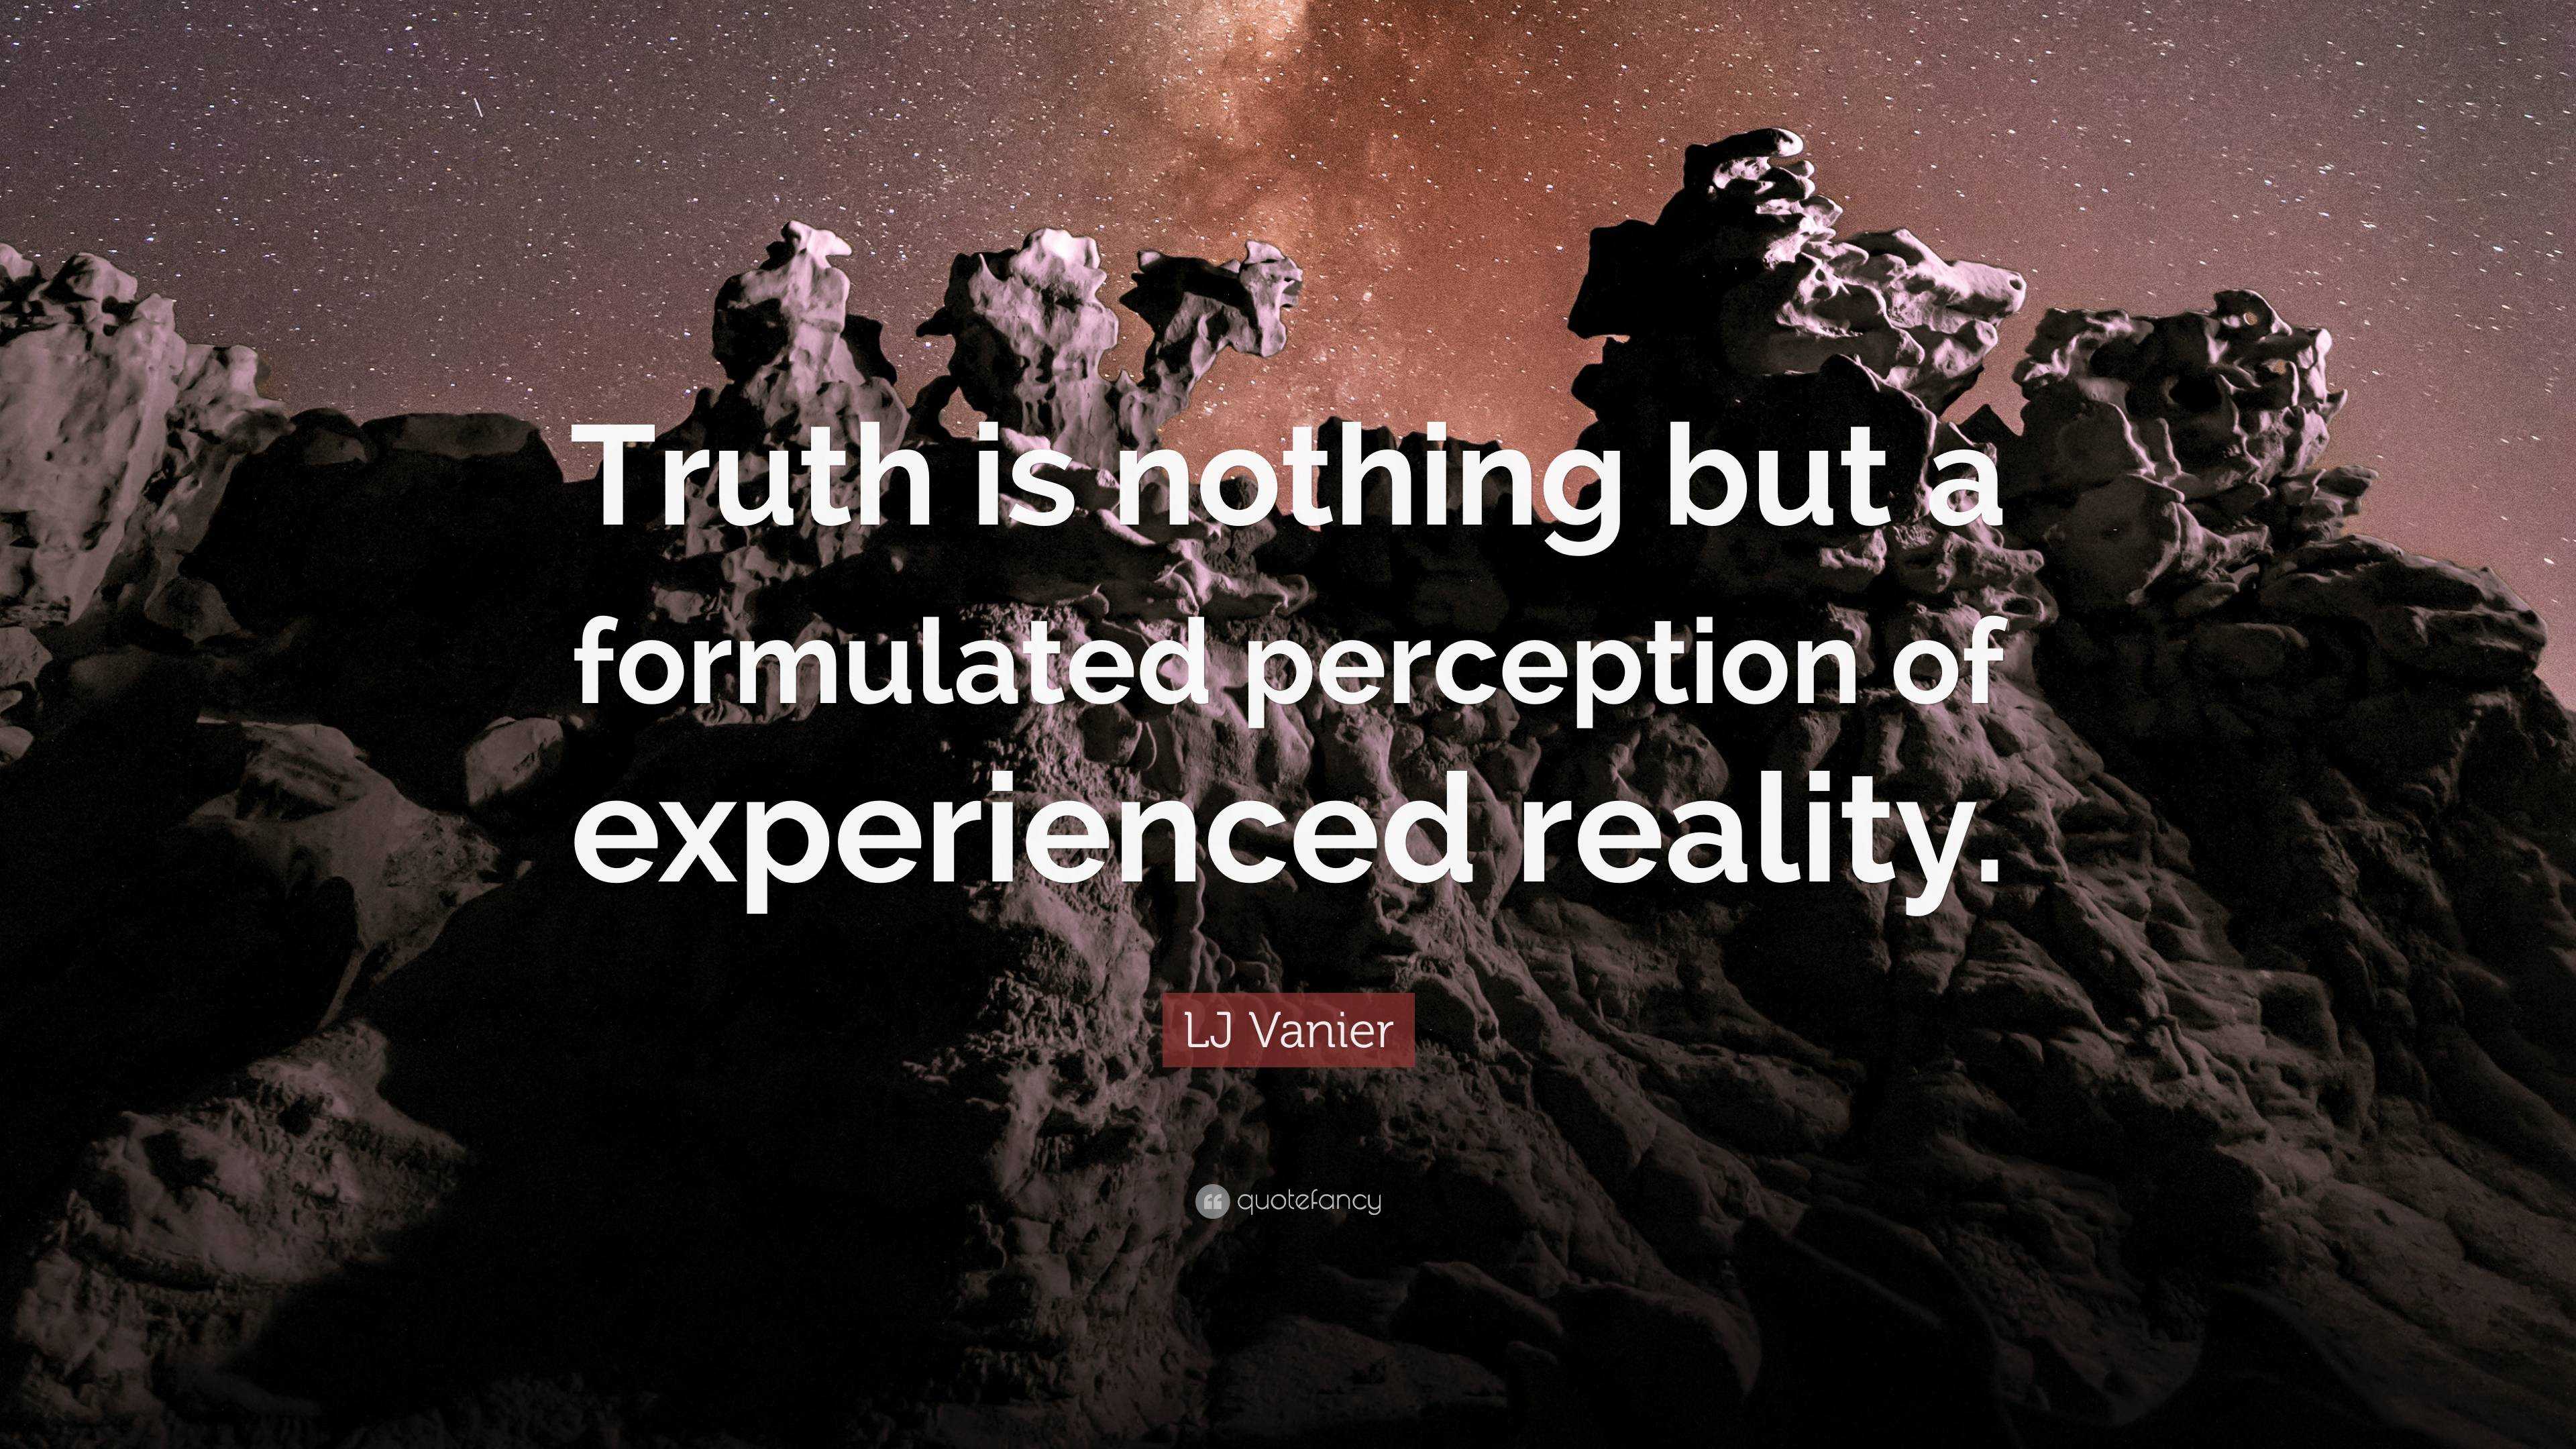 Perception Vs Reality Quotes